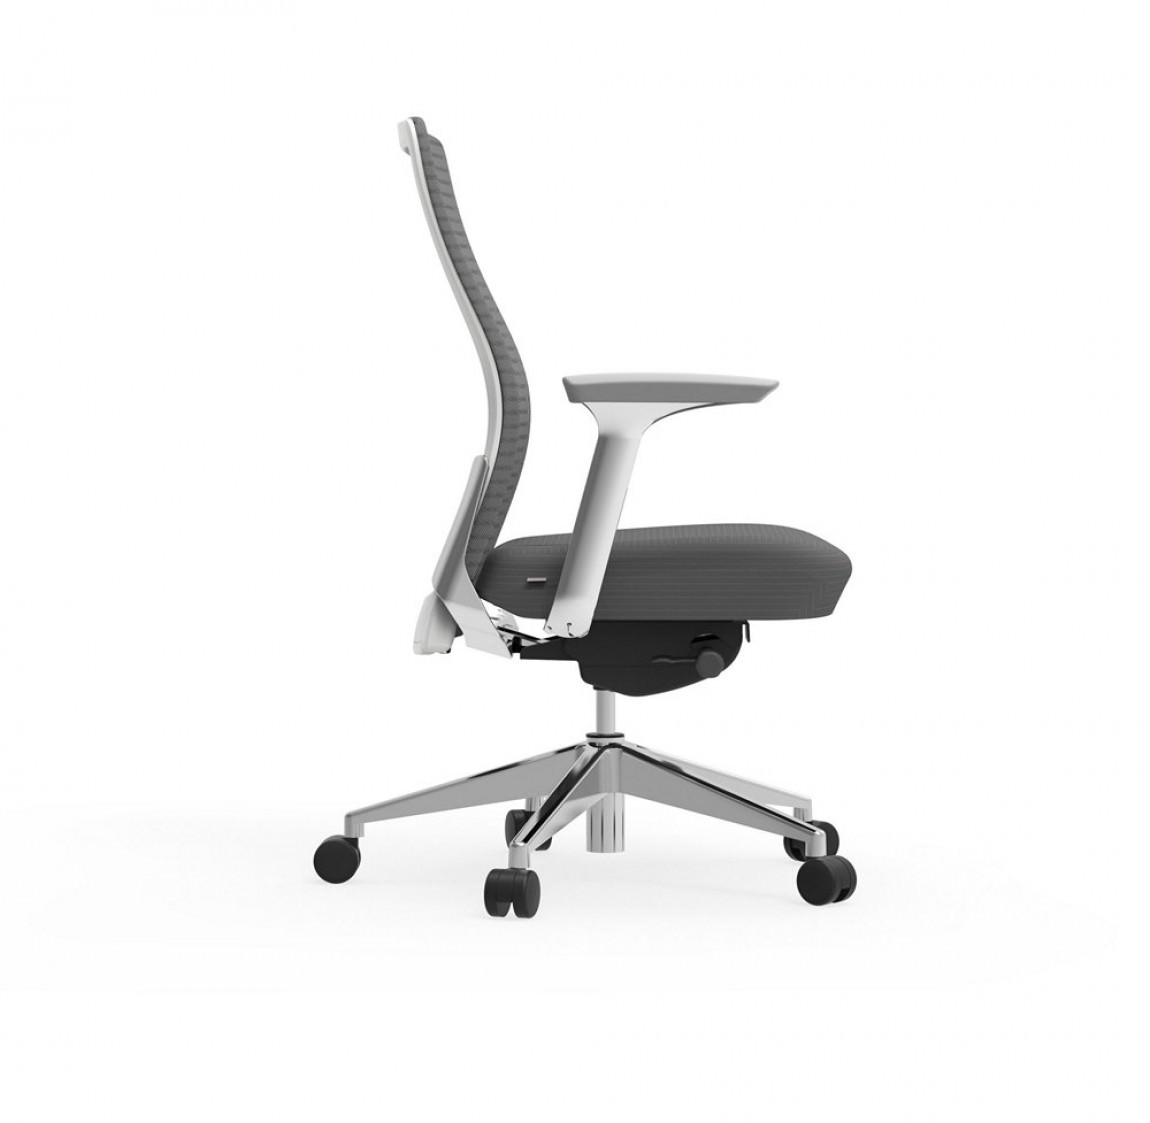 https://madisonliquidators.com/images/p/1150/8288-gray-mesh-back-conference-room-chair-5.jpg